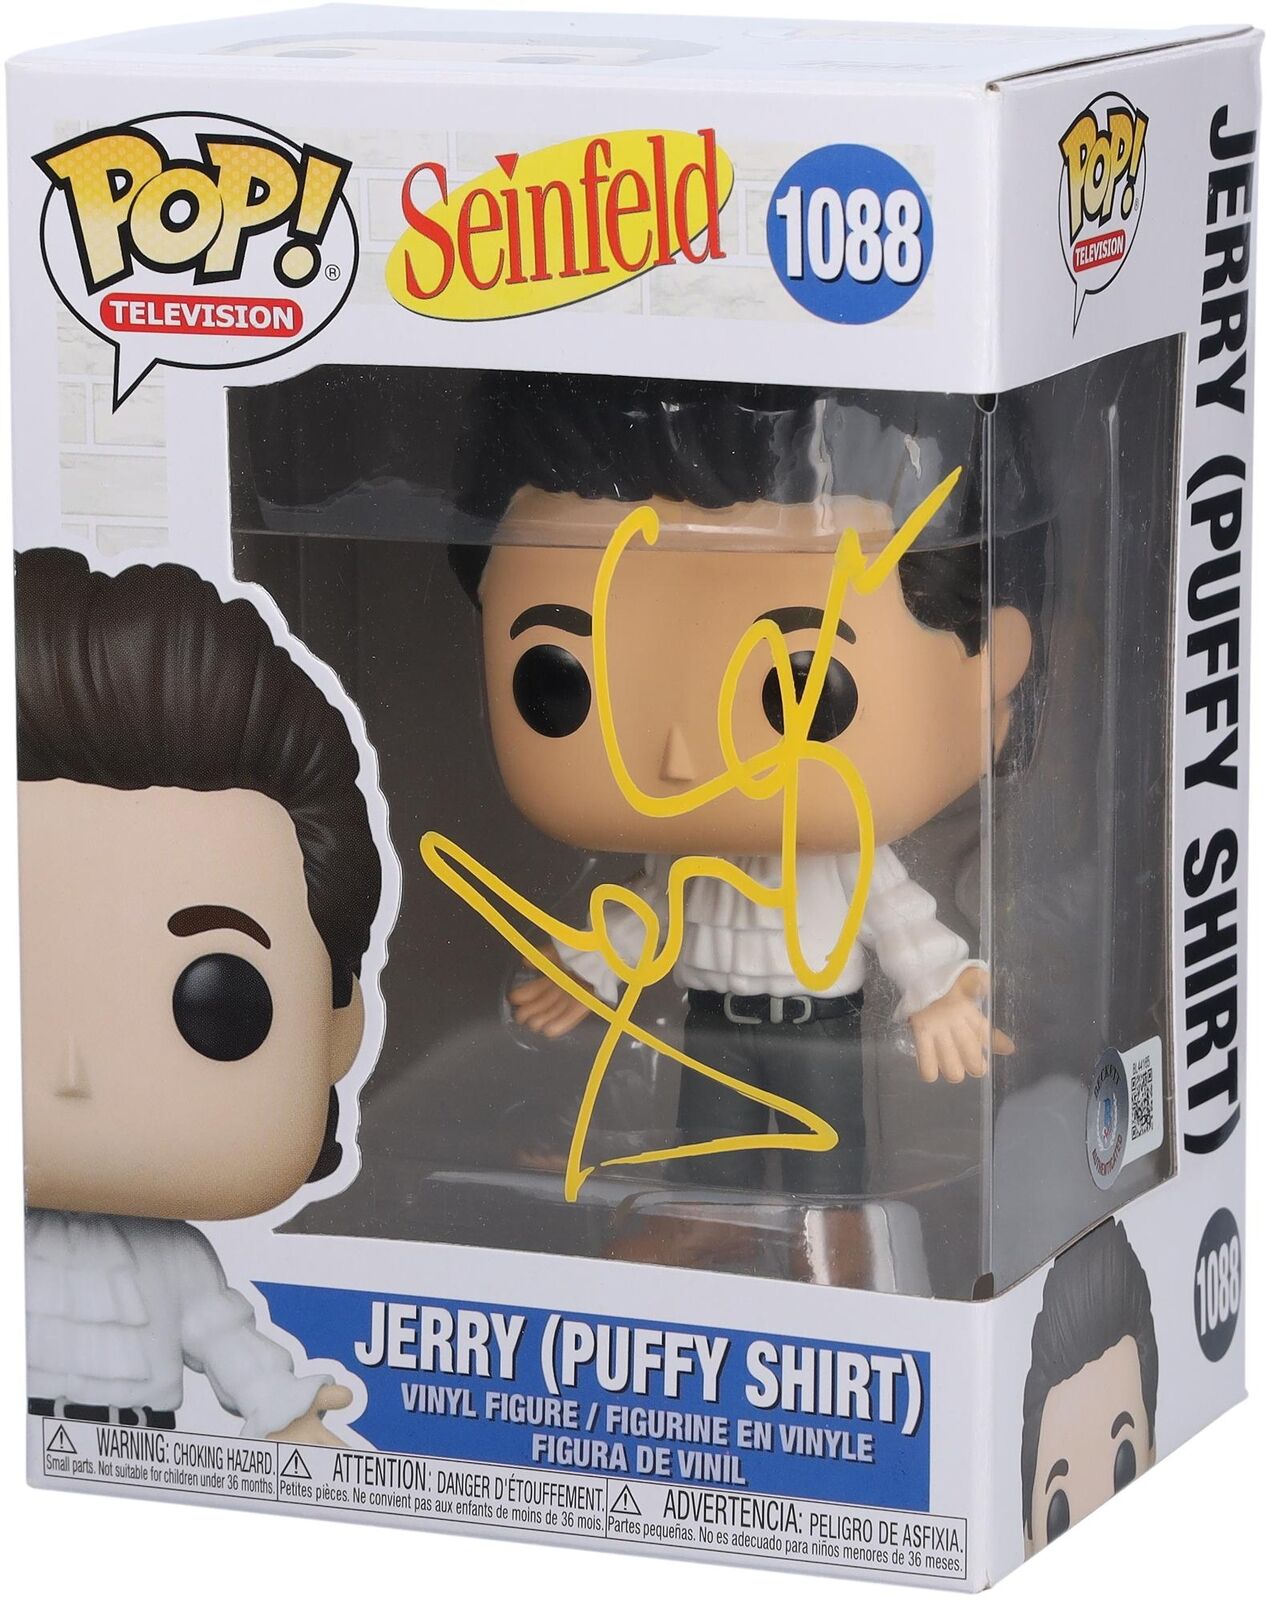 Jerry Seinfeld Seinfeld TV Figurine Item#13357182